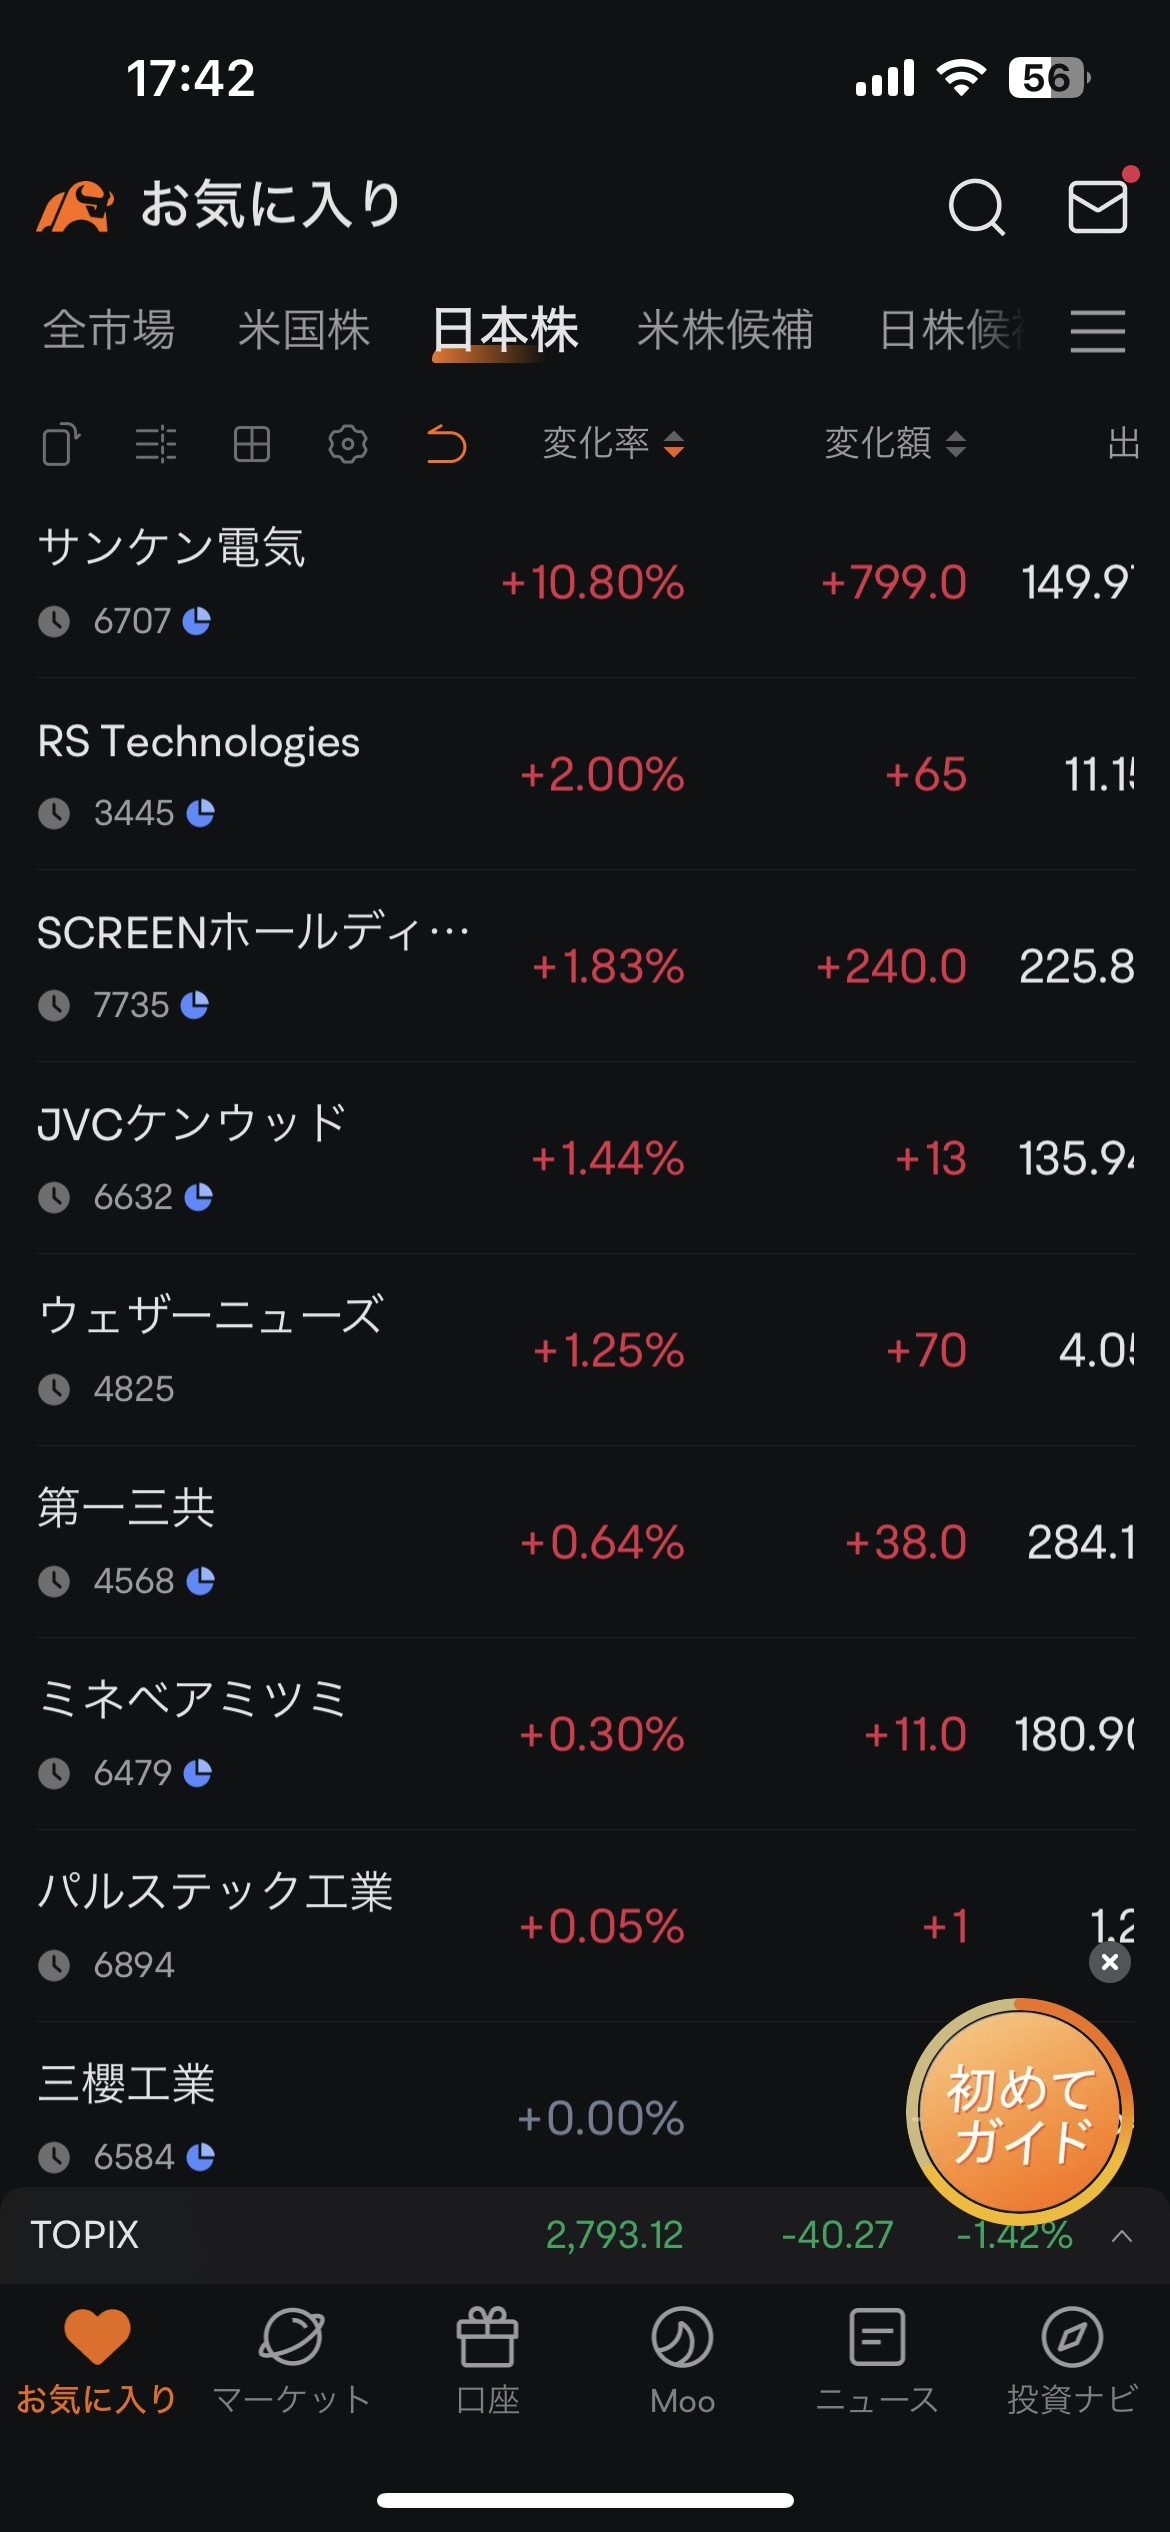 Today's Japanese stocks